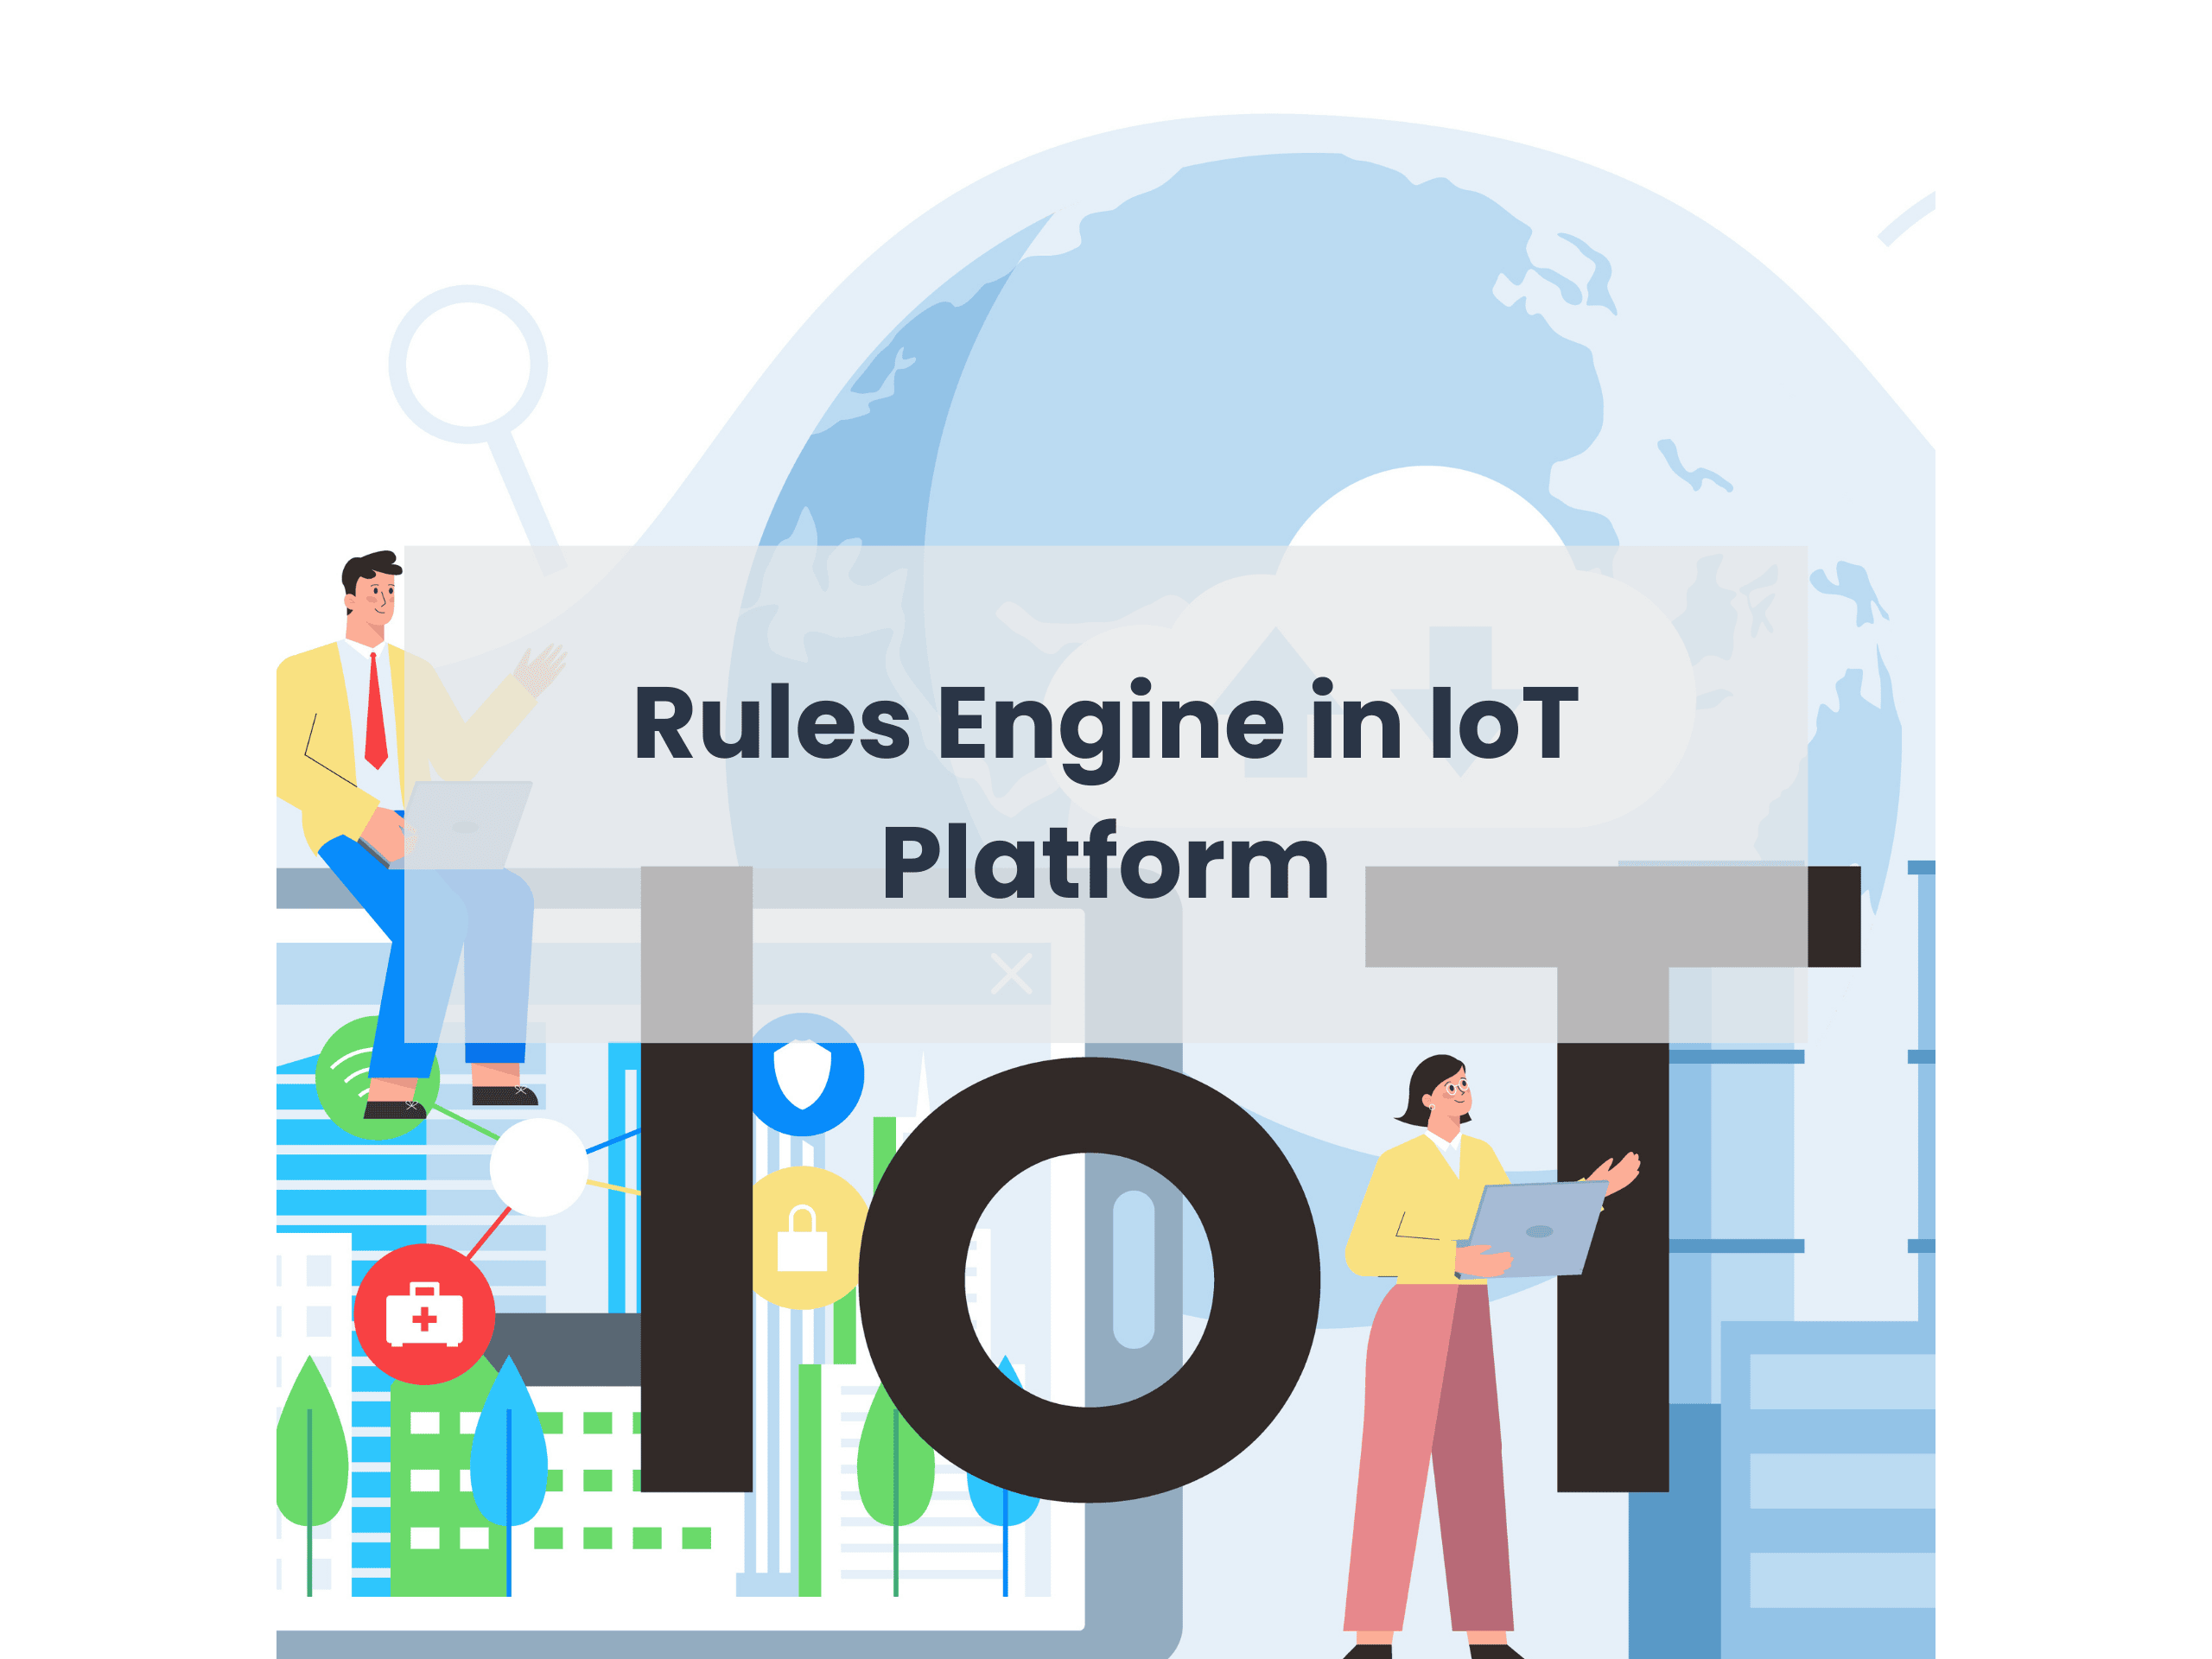 Rules Engine in IoT Platform